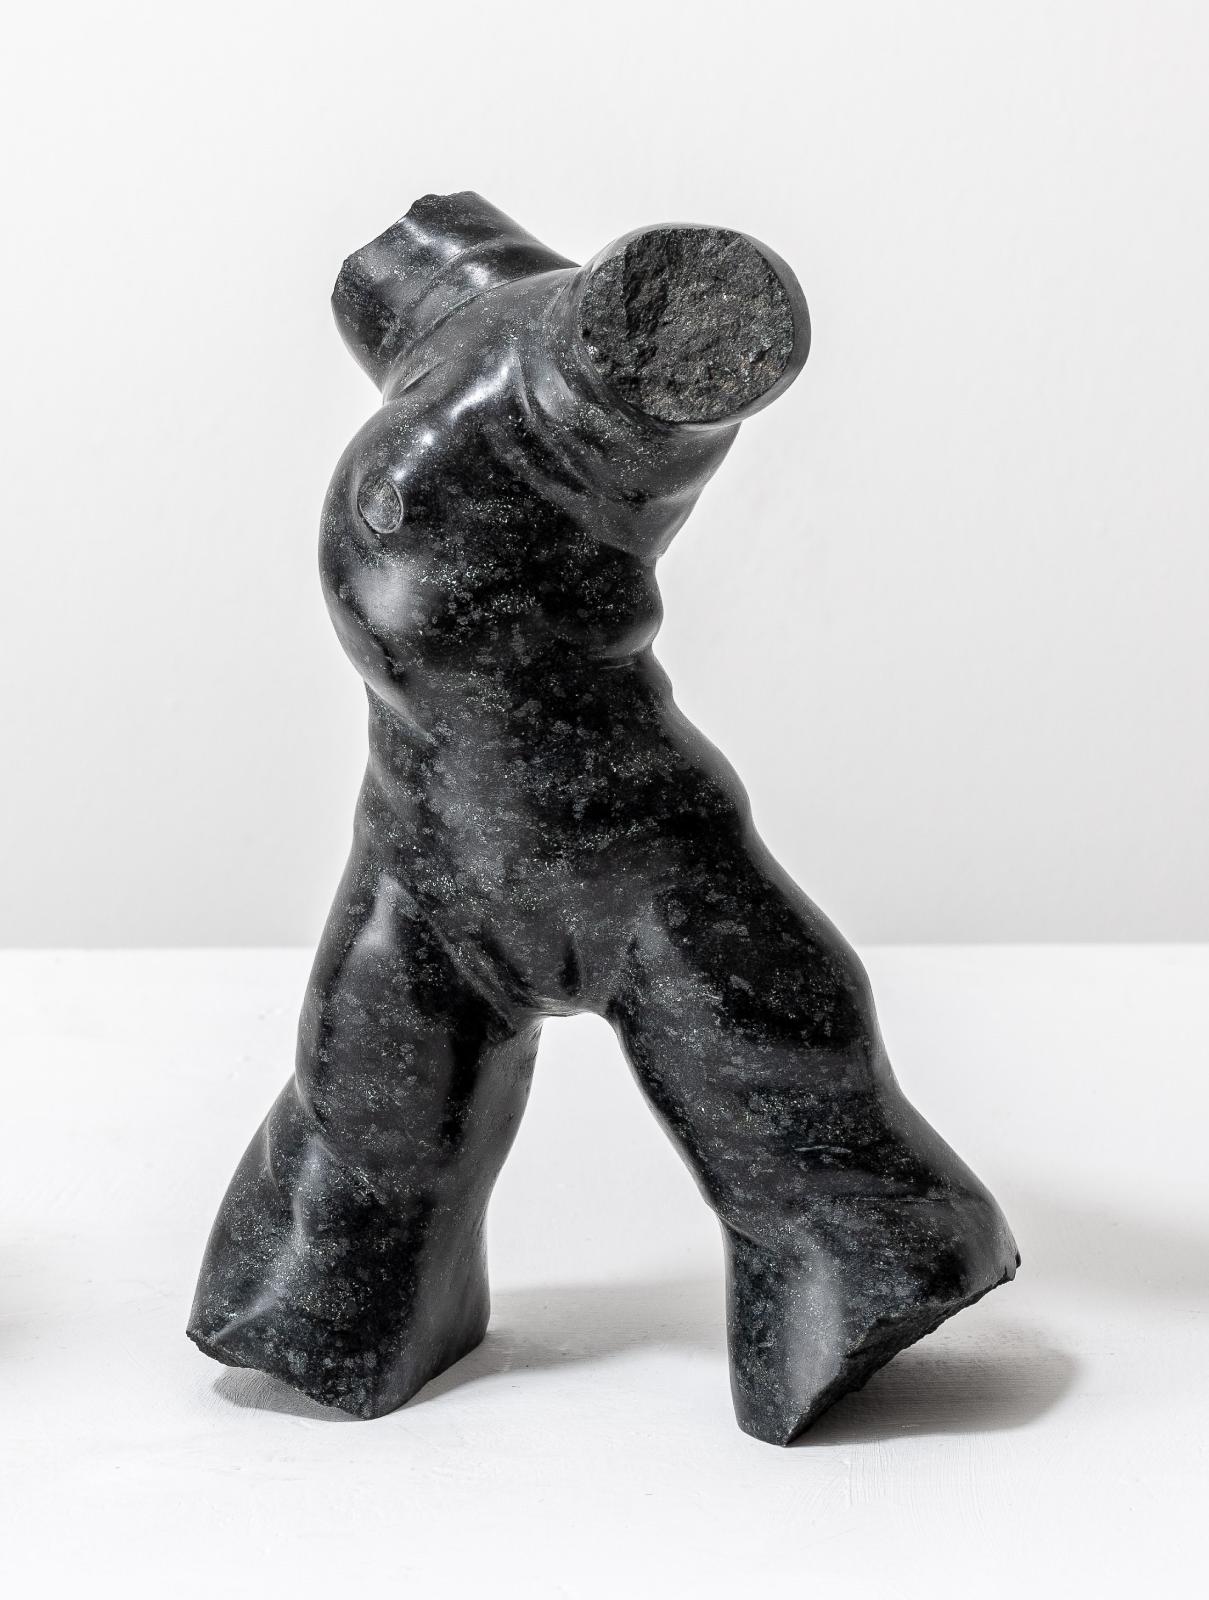 Christoph Traub, Antikörper 1, 2019, Diabas, 32 x 12 x 22 cm, trc002ko